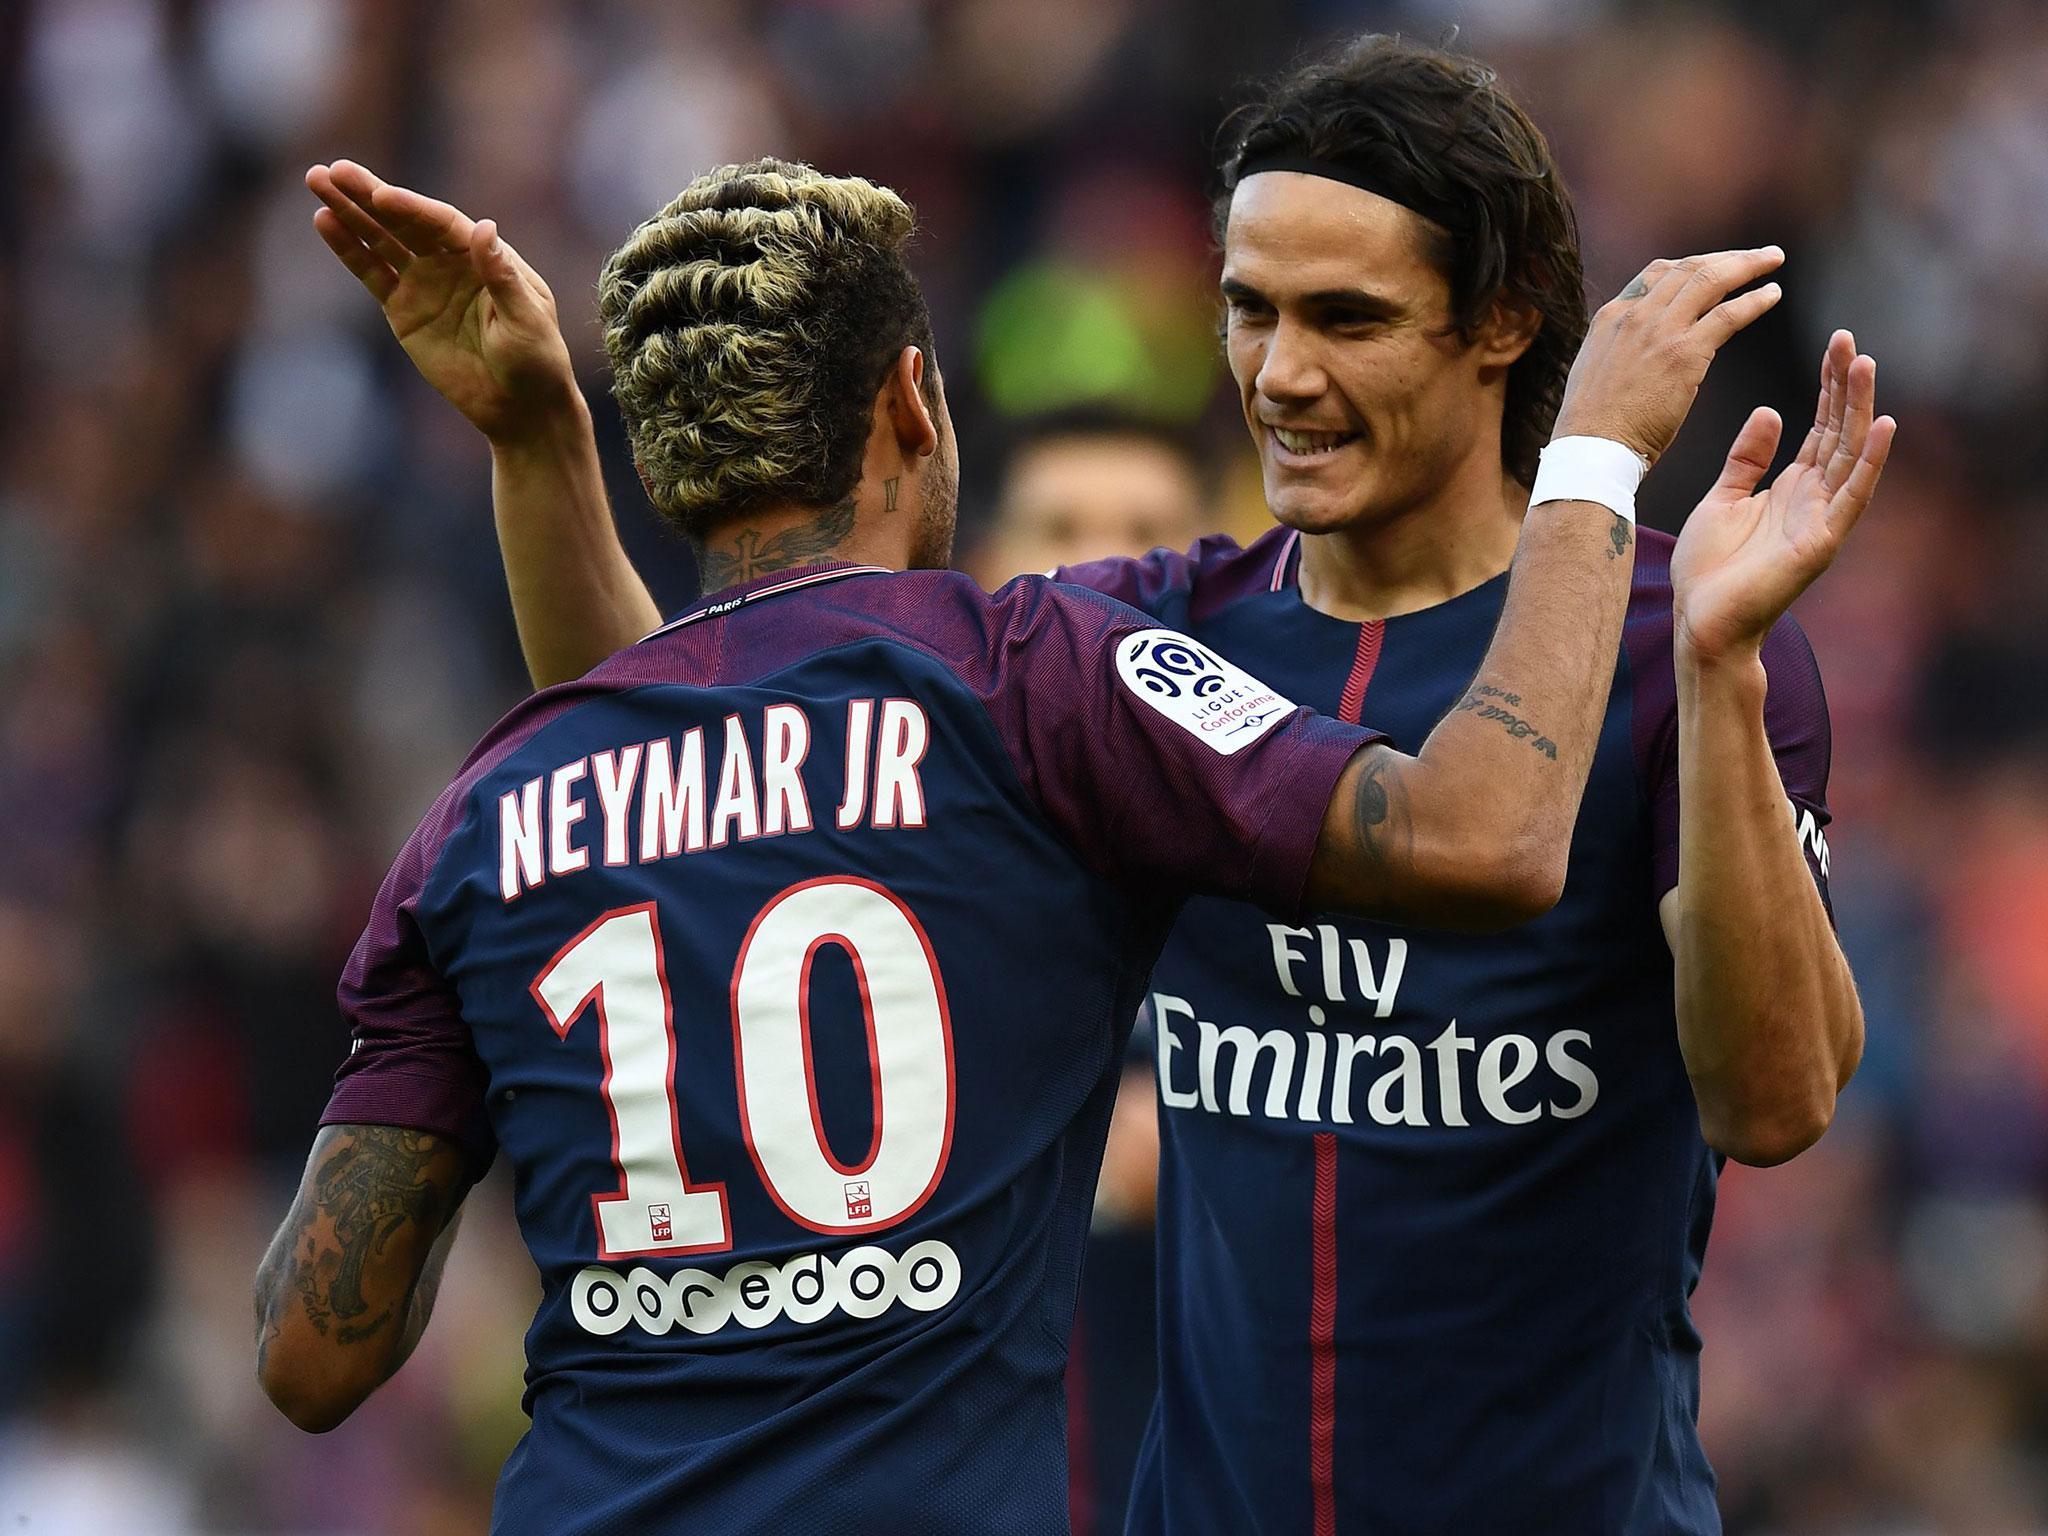 Neymar and Edinson Cavani celebrate a goal together